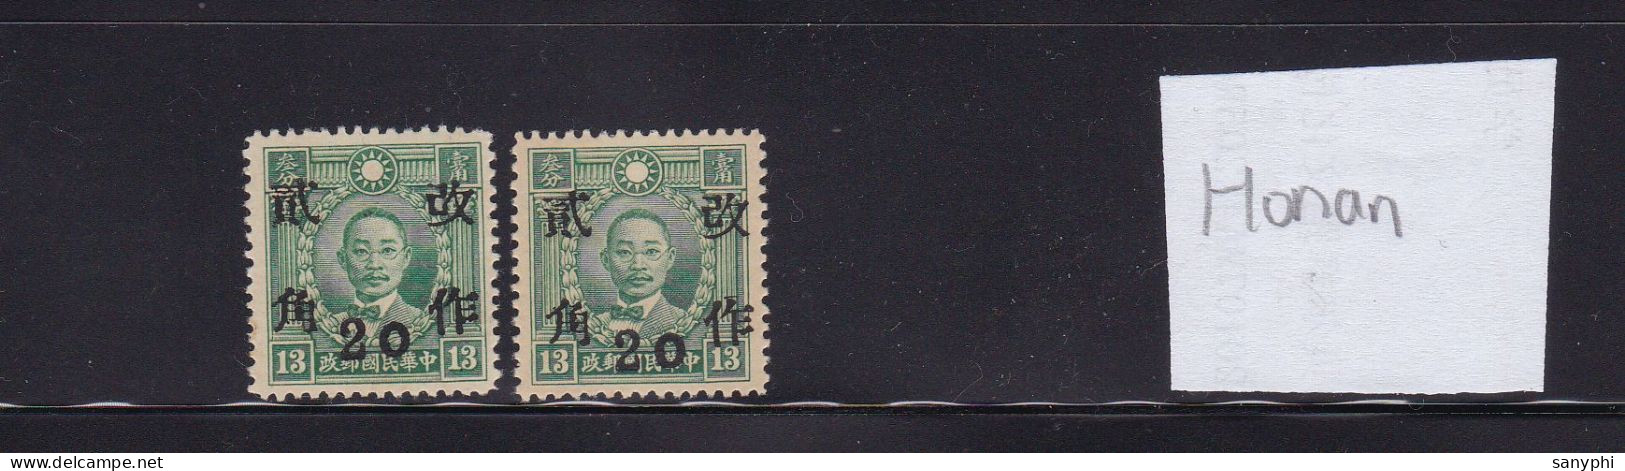 China Republic Martyt Provincial Ovpts 2 Unused Stamps-Honan - 1912-1949 Republic